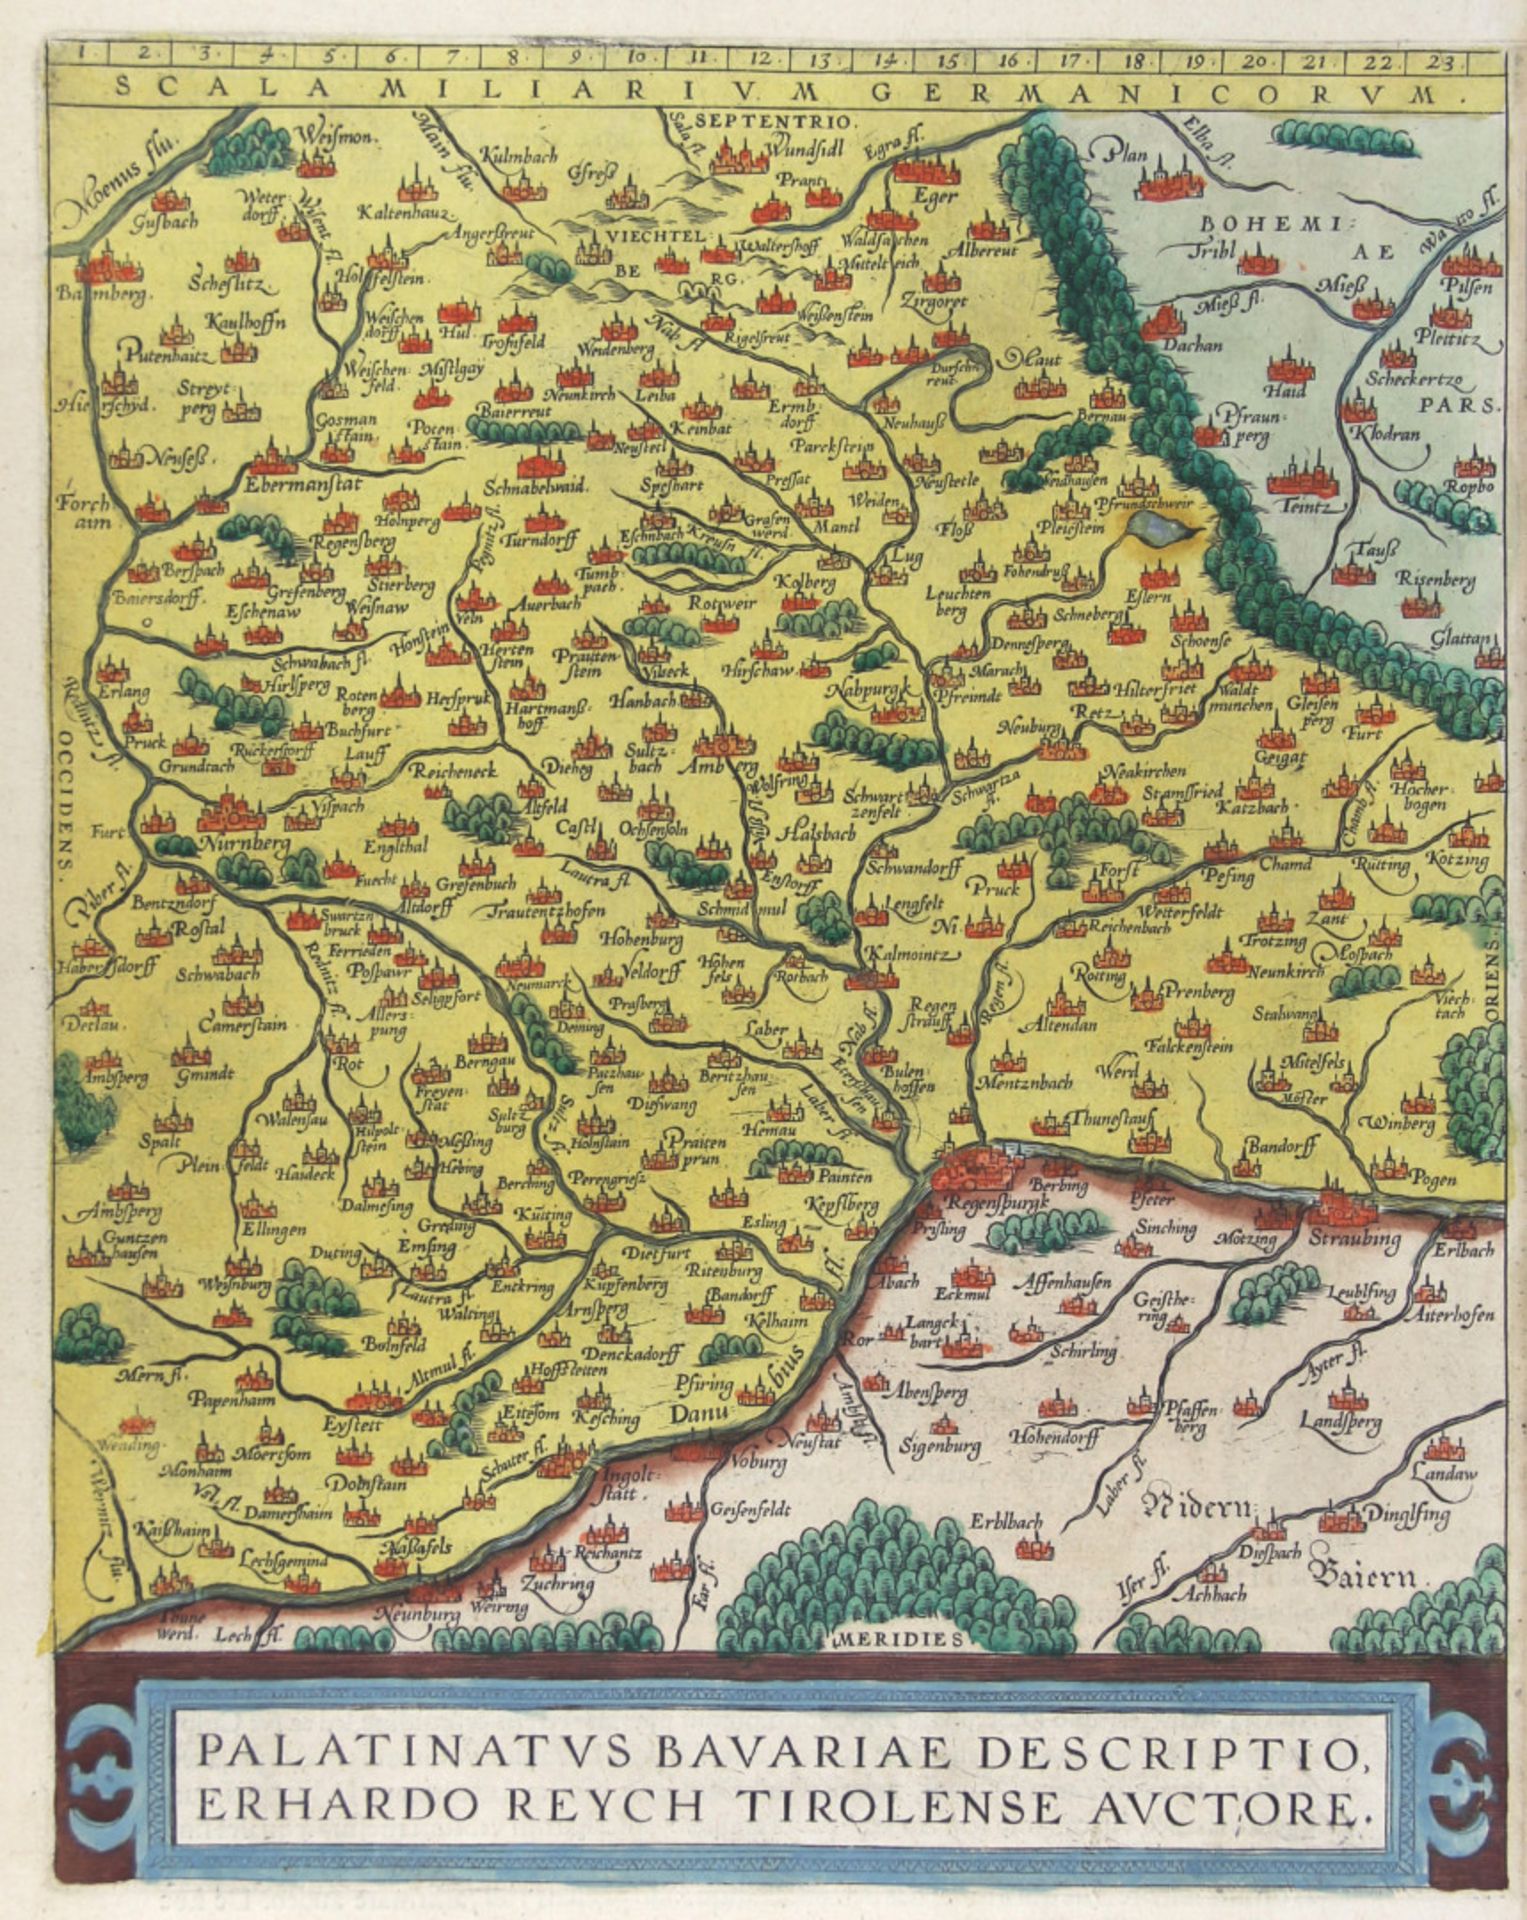 Bayern. - Oberpfalz. - "Palatinatus Bavariae Descriptio, Erhardo Reych Tirolense Auctore".